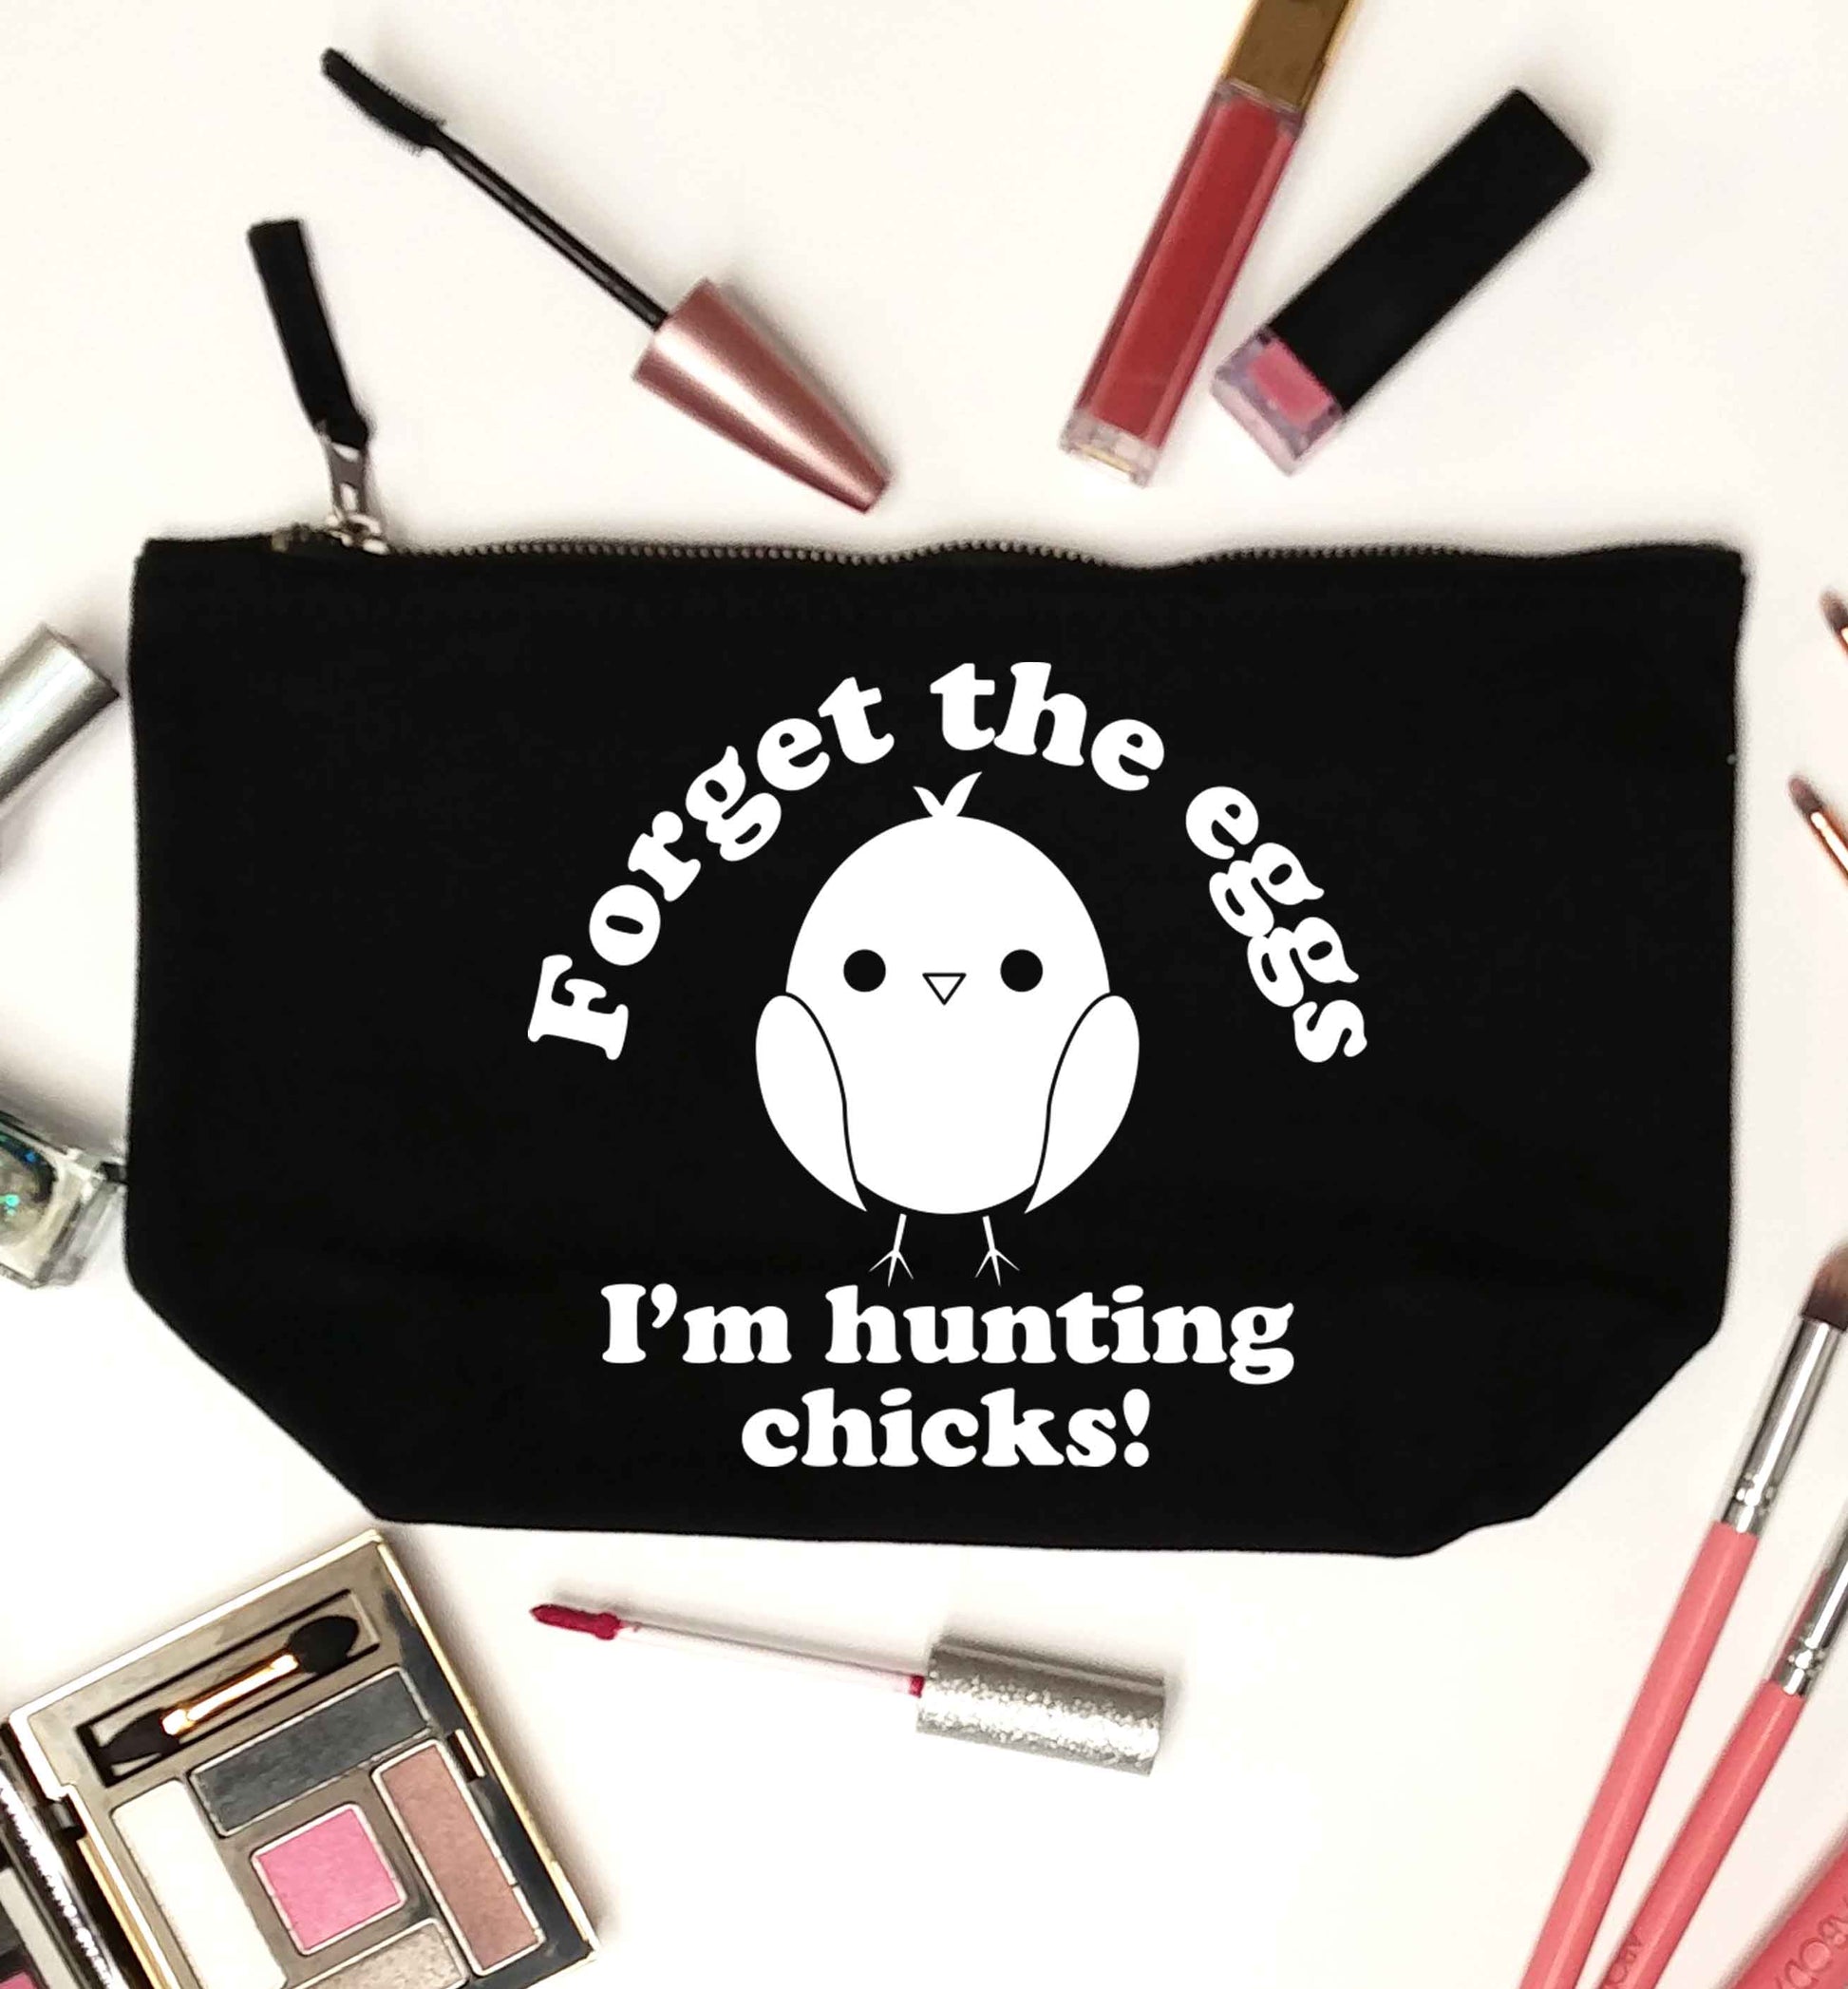 Forget the eggs I'm hunting chicks! black makeup bag